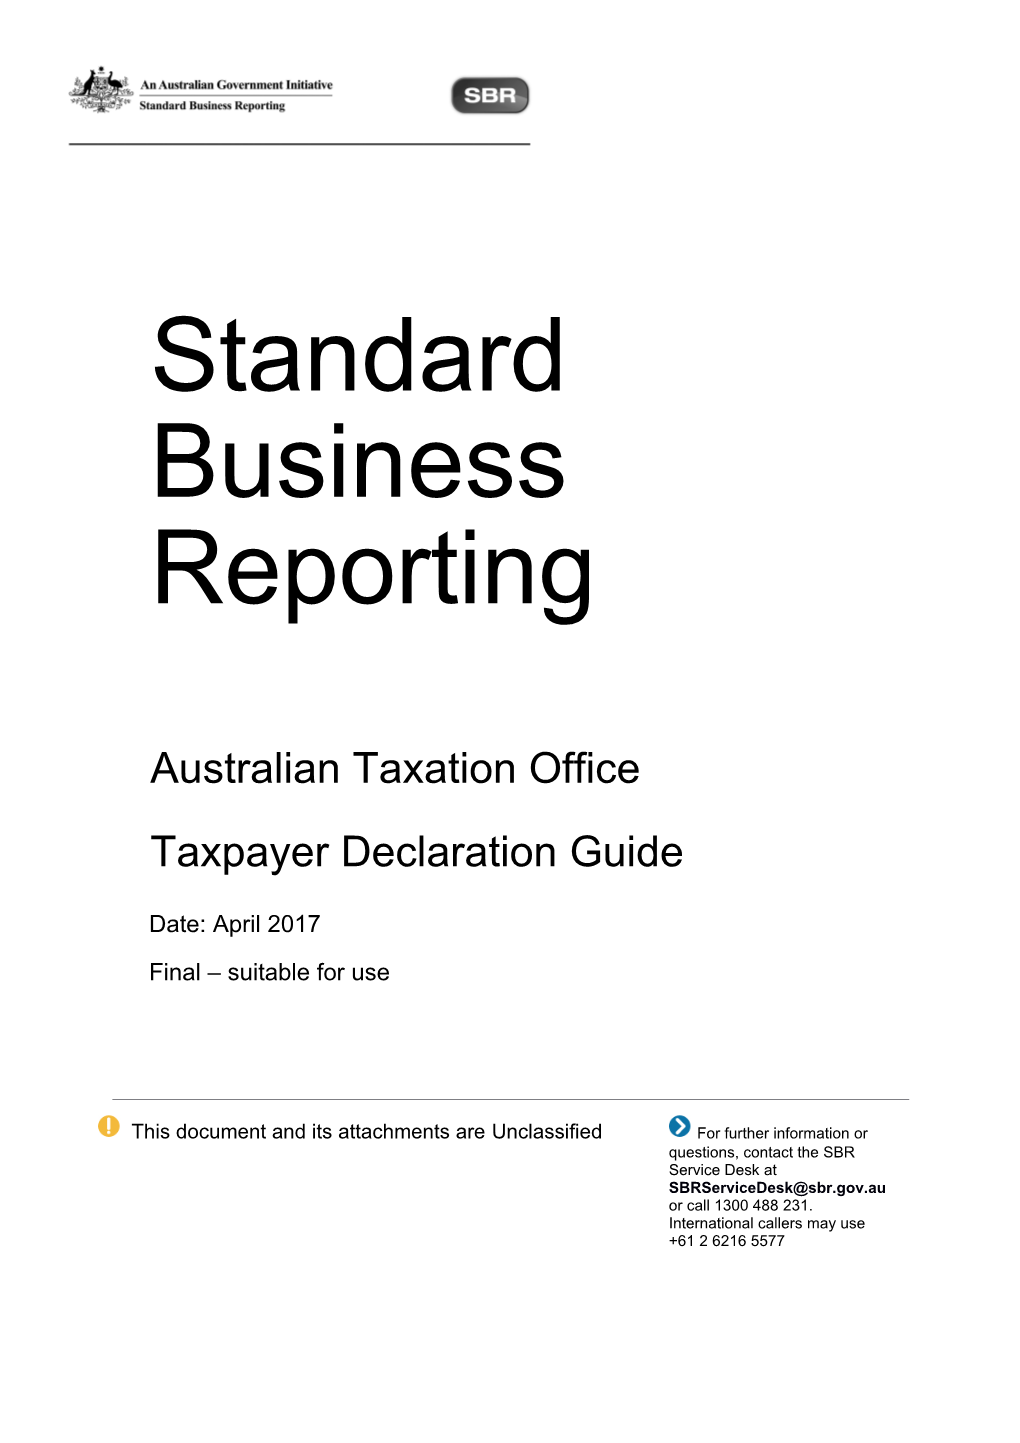 ATO Taxpayer Declaration Guide